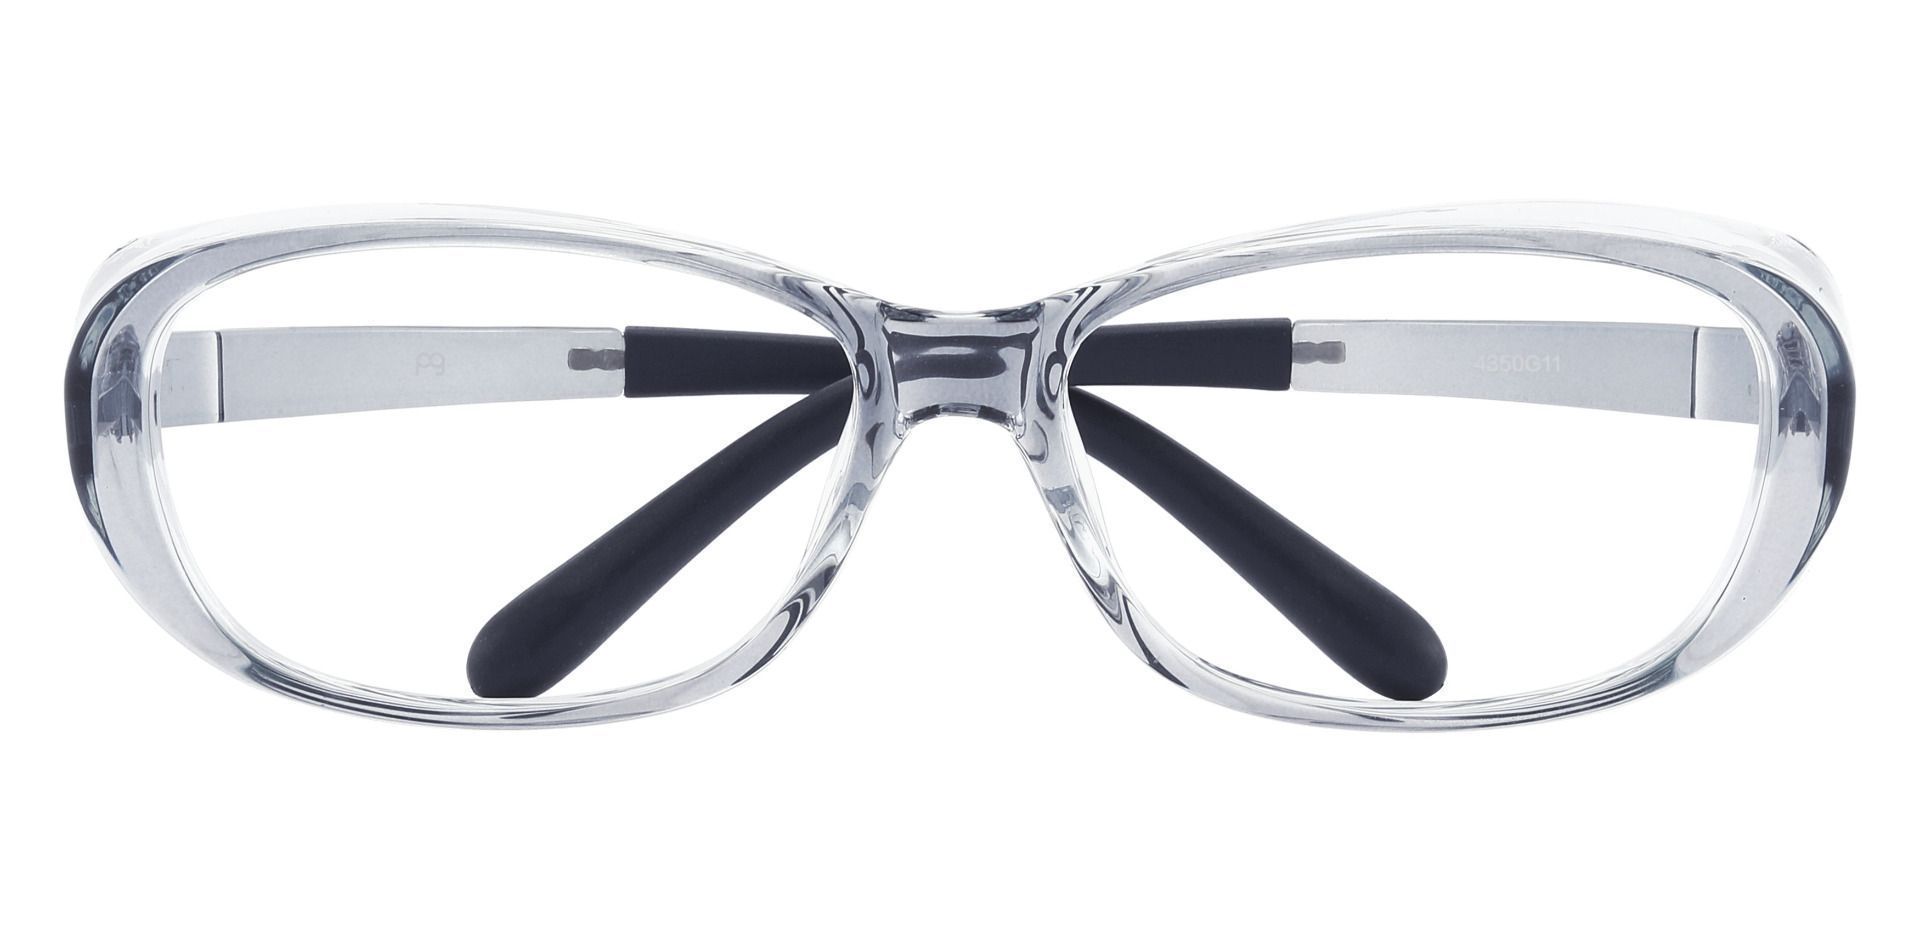 Omega Sports Goggles Eyeglasses Frame - Gray